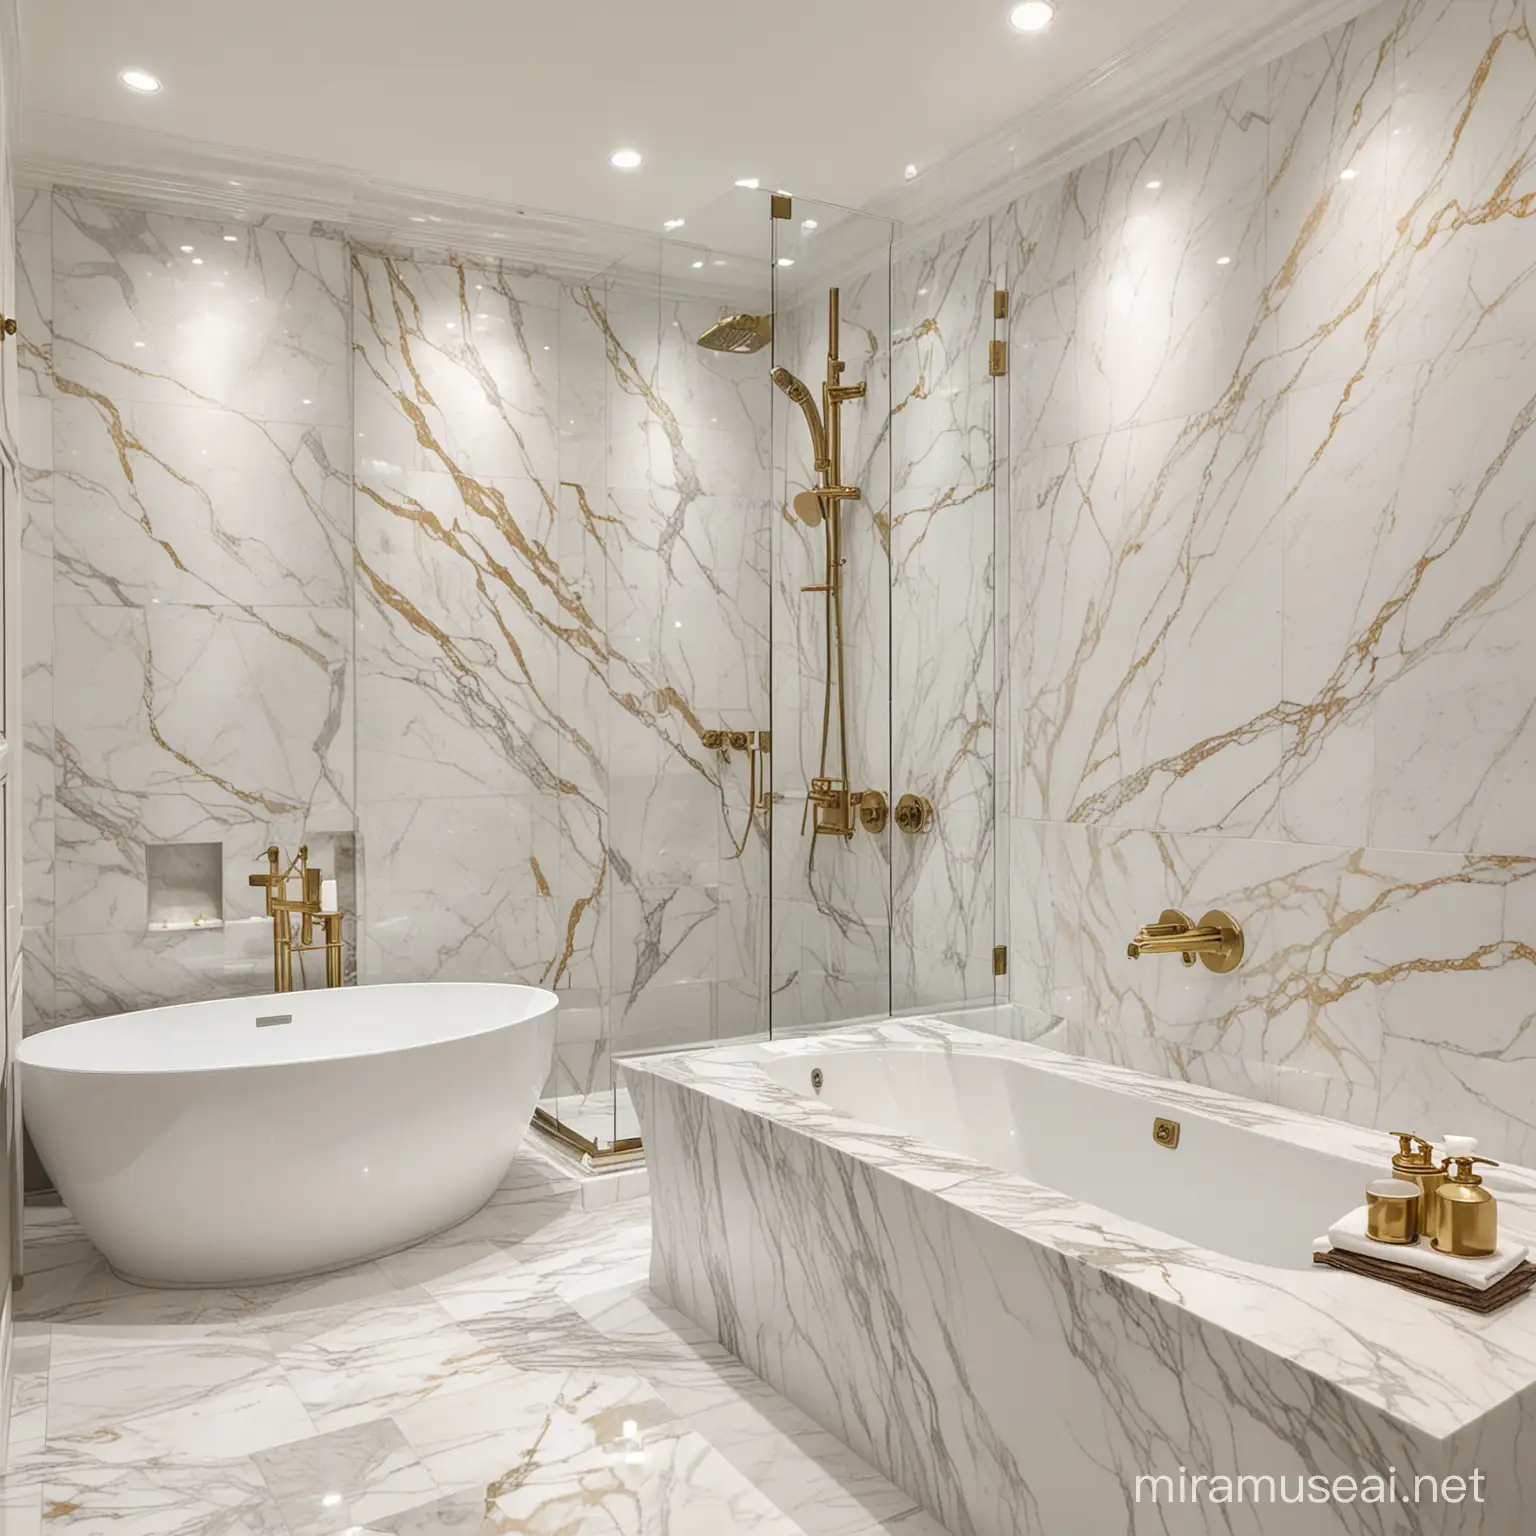 Luxury home bathroom with calacatta gold marble